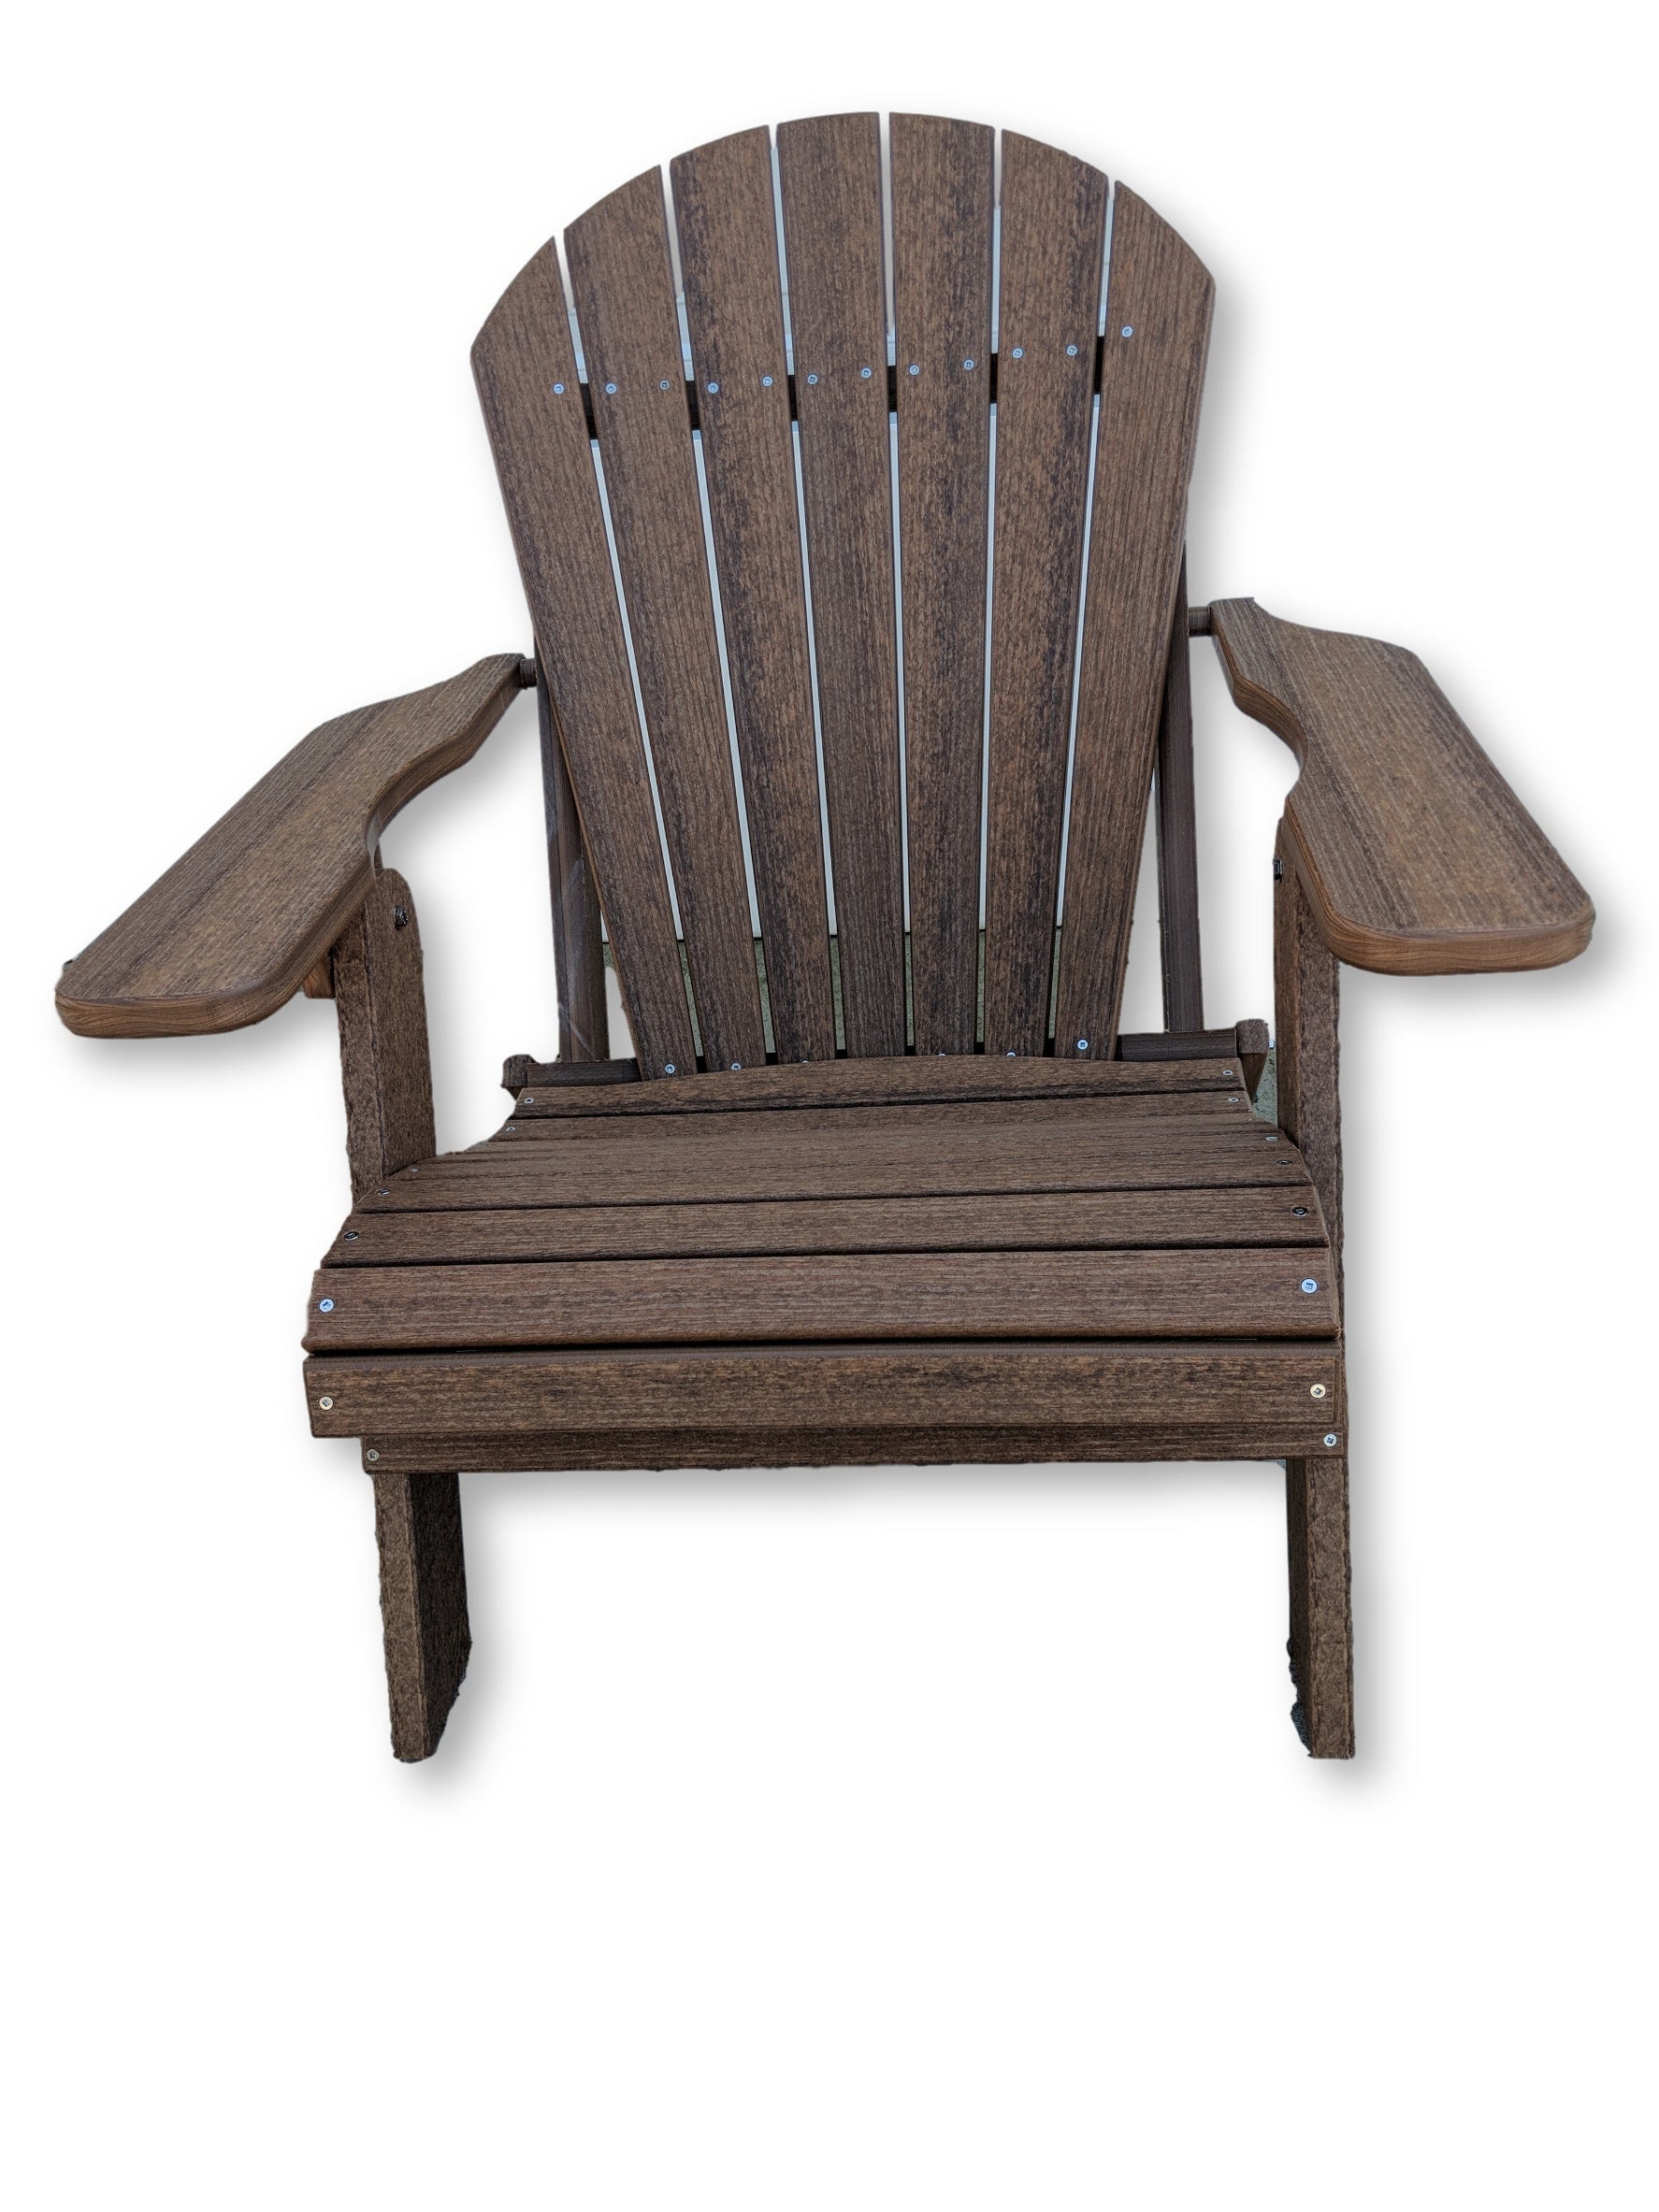 Antique Mahogany Folding Adirondack Chair(No Cup Holders)